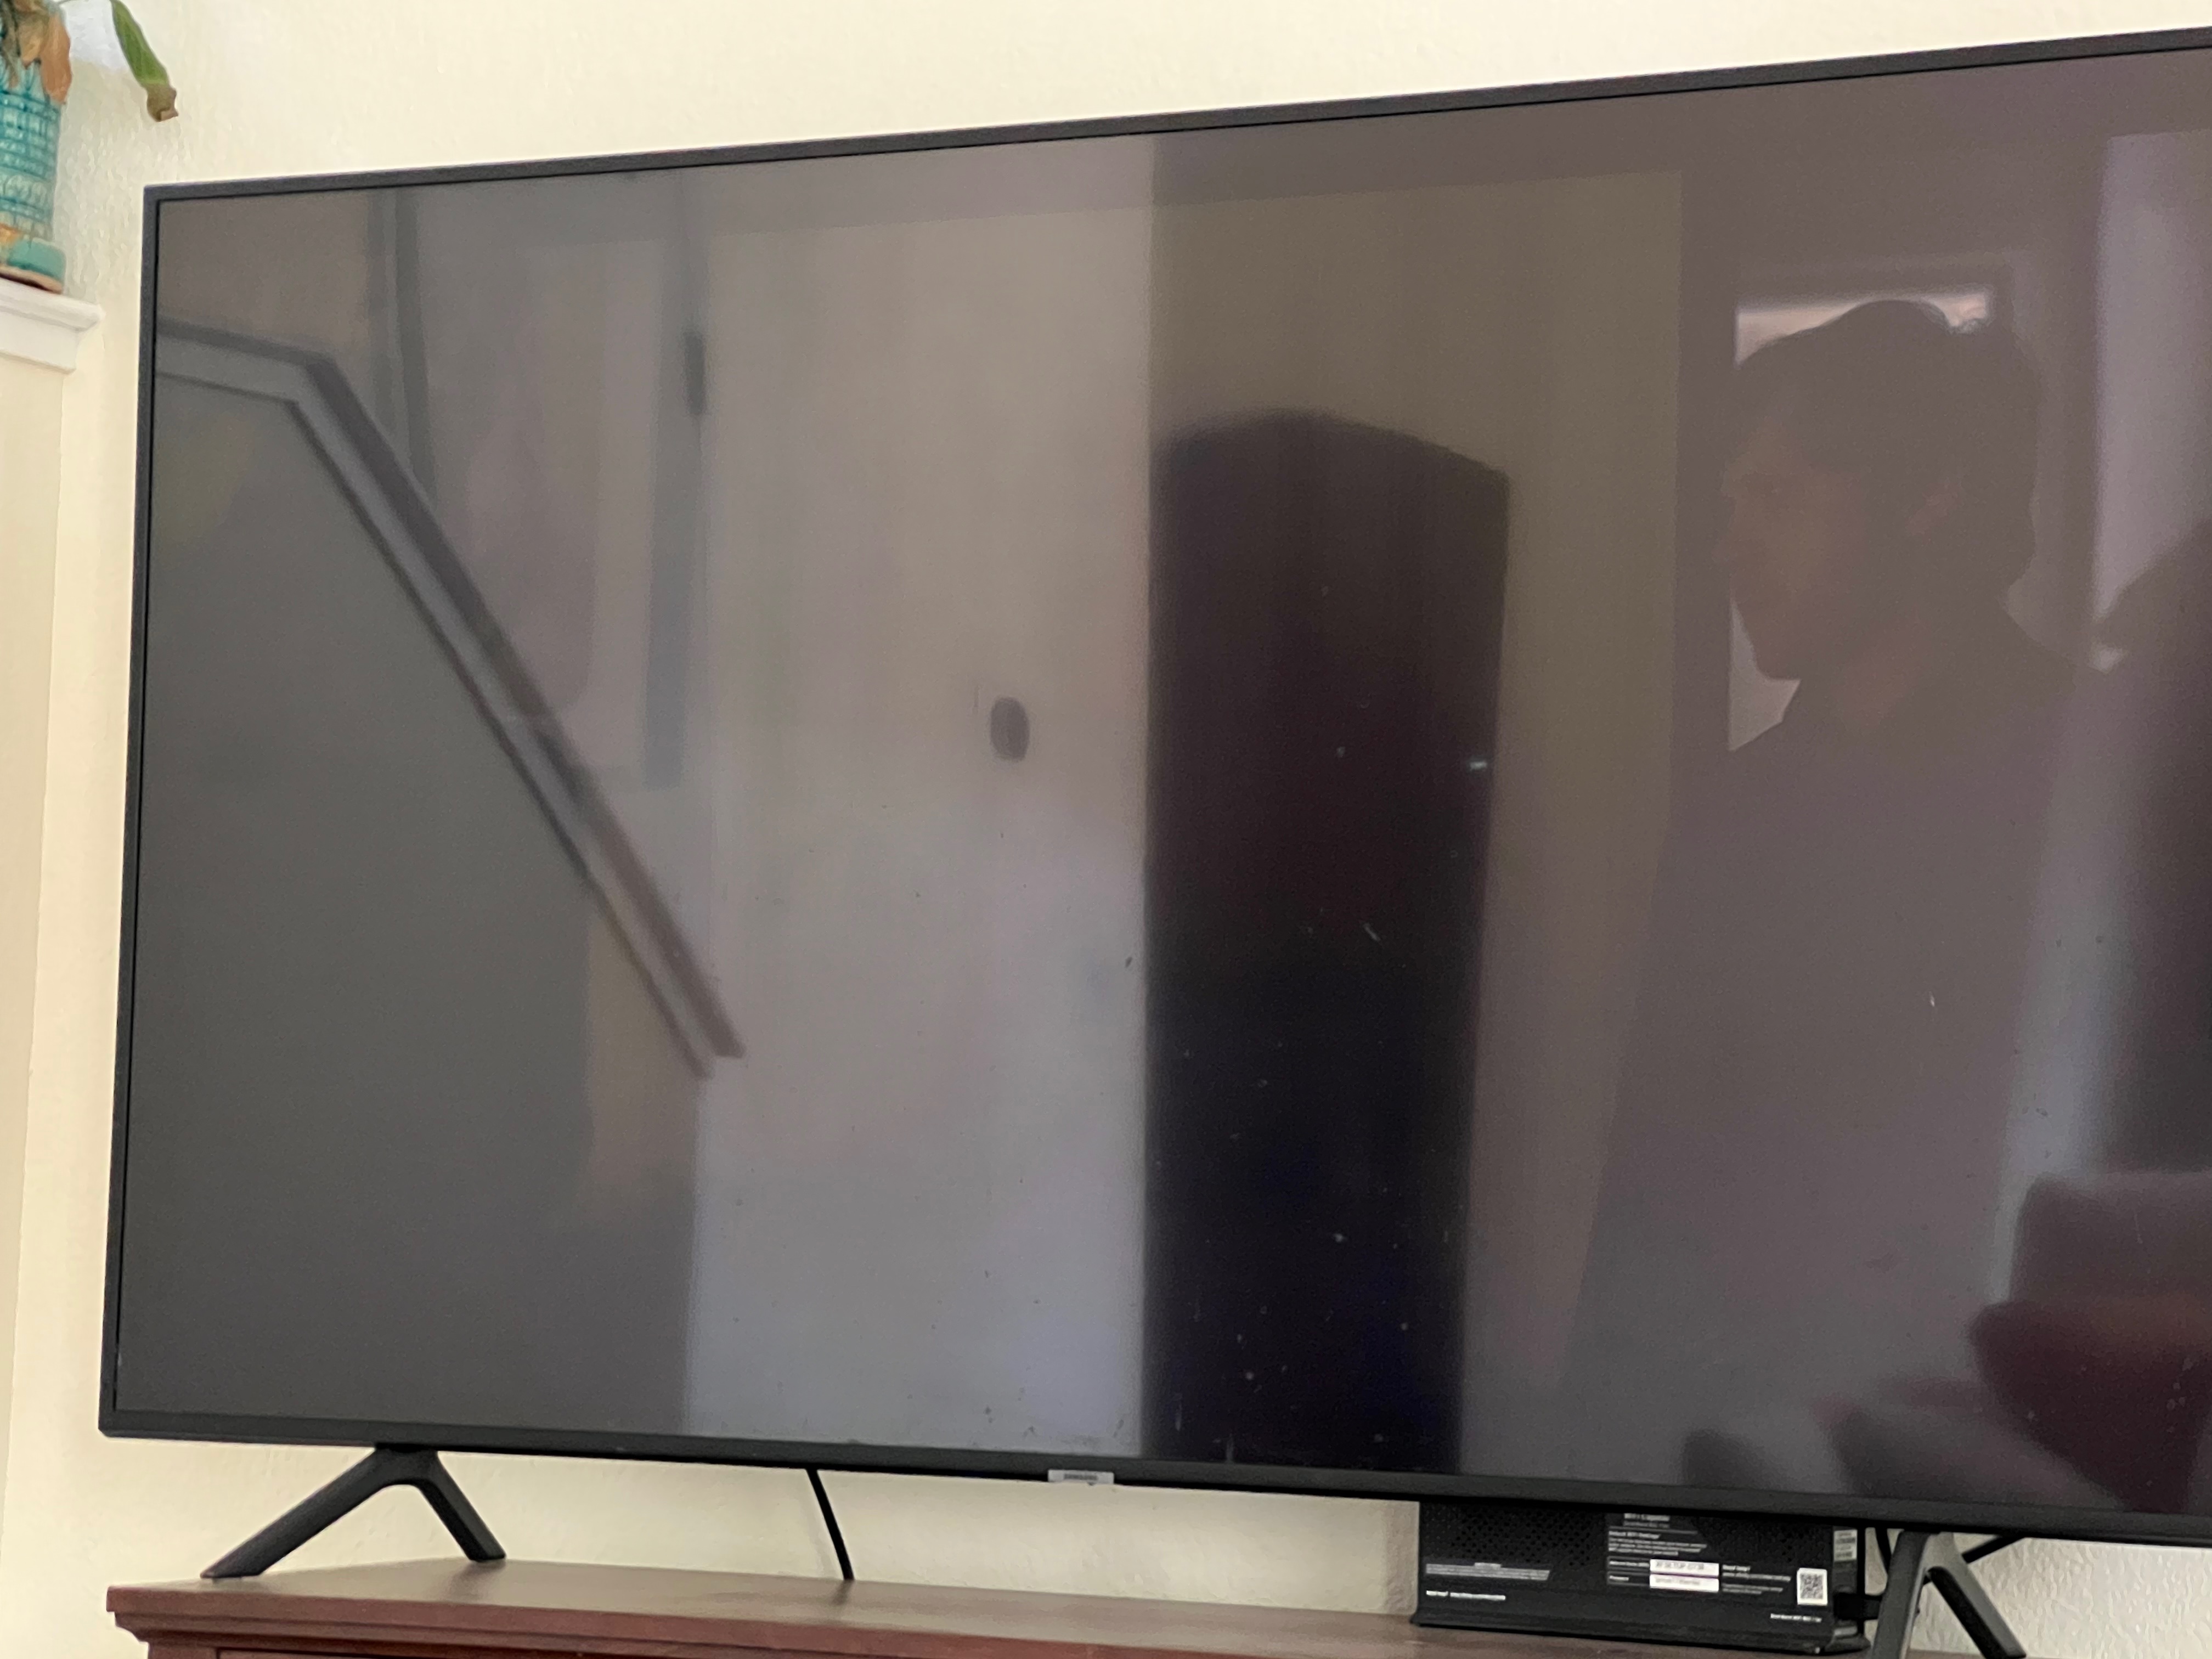 Restore Apple TV Not Working - Apple Community